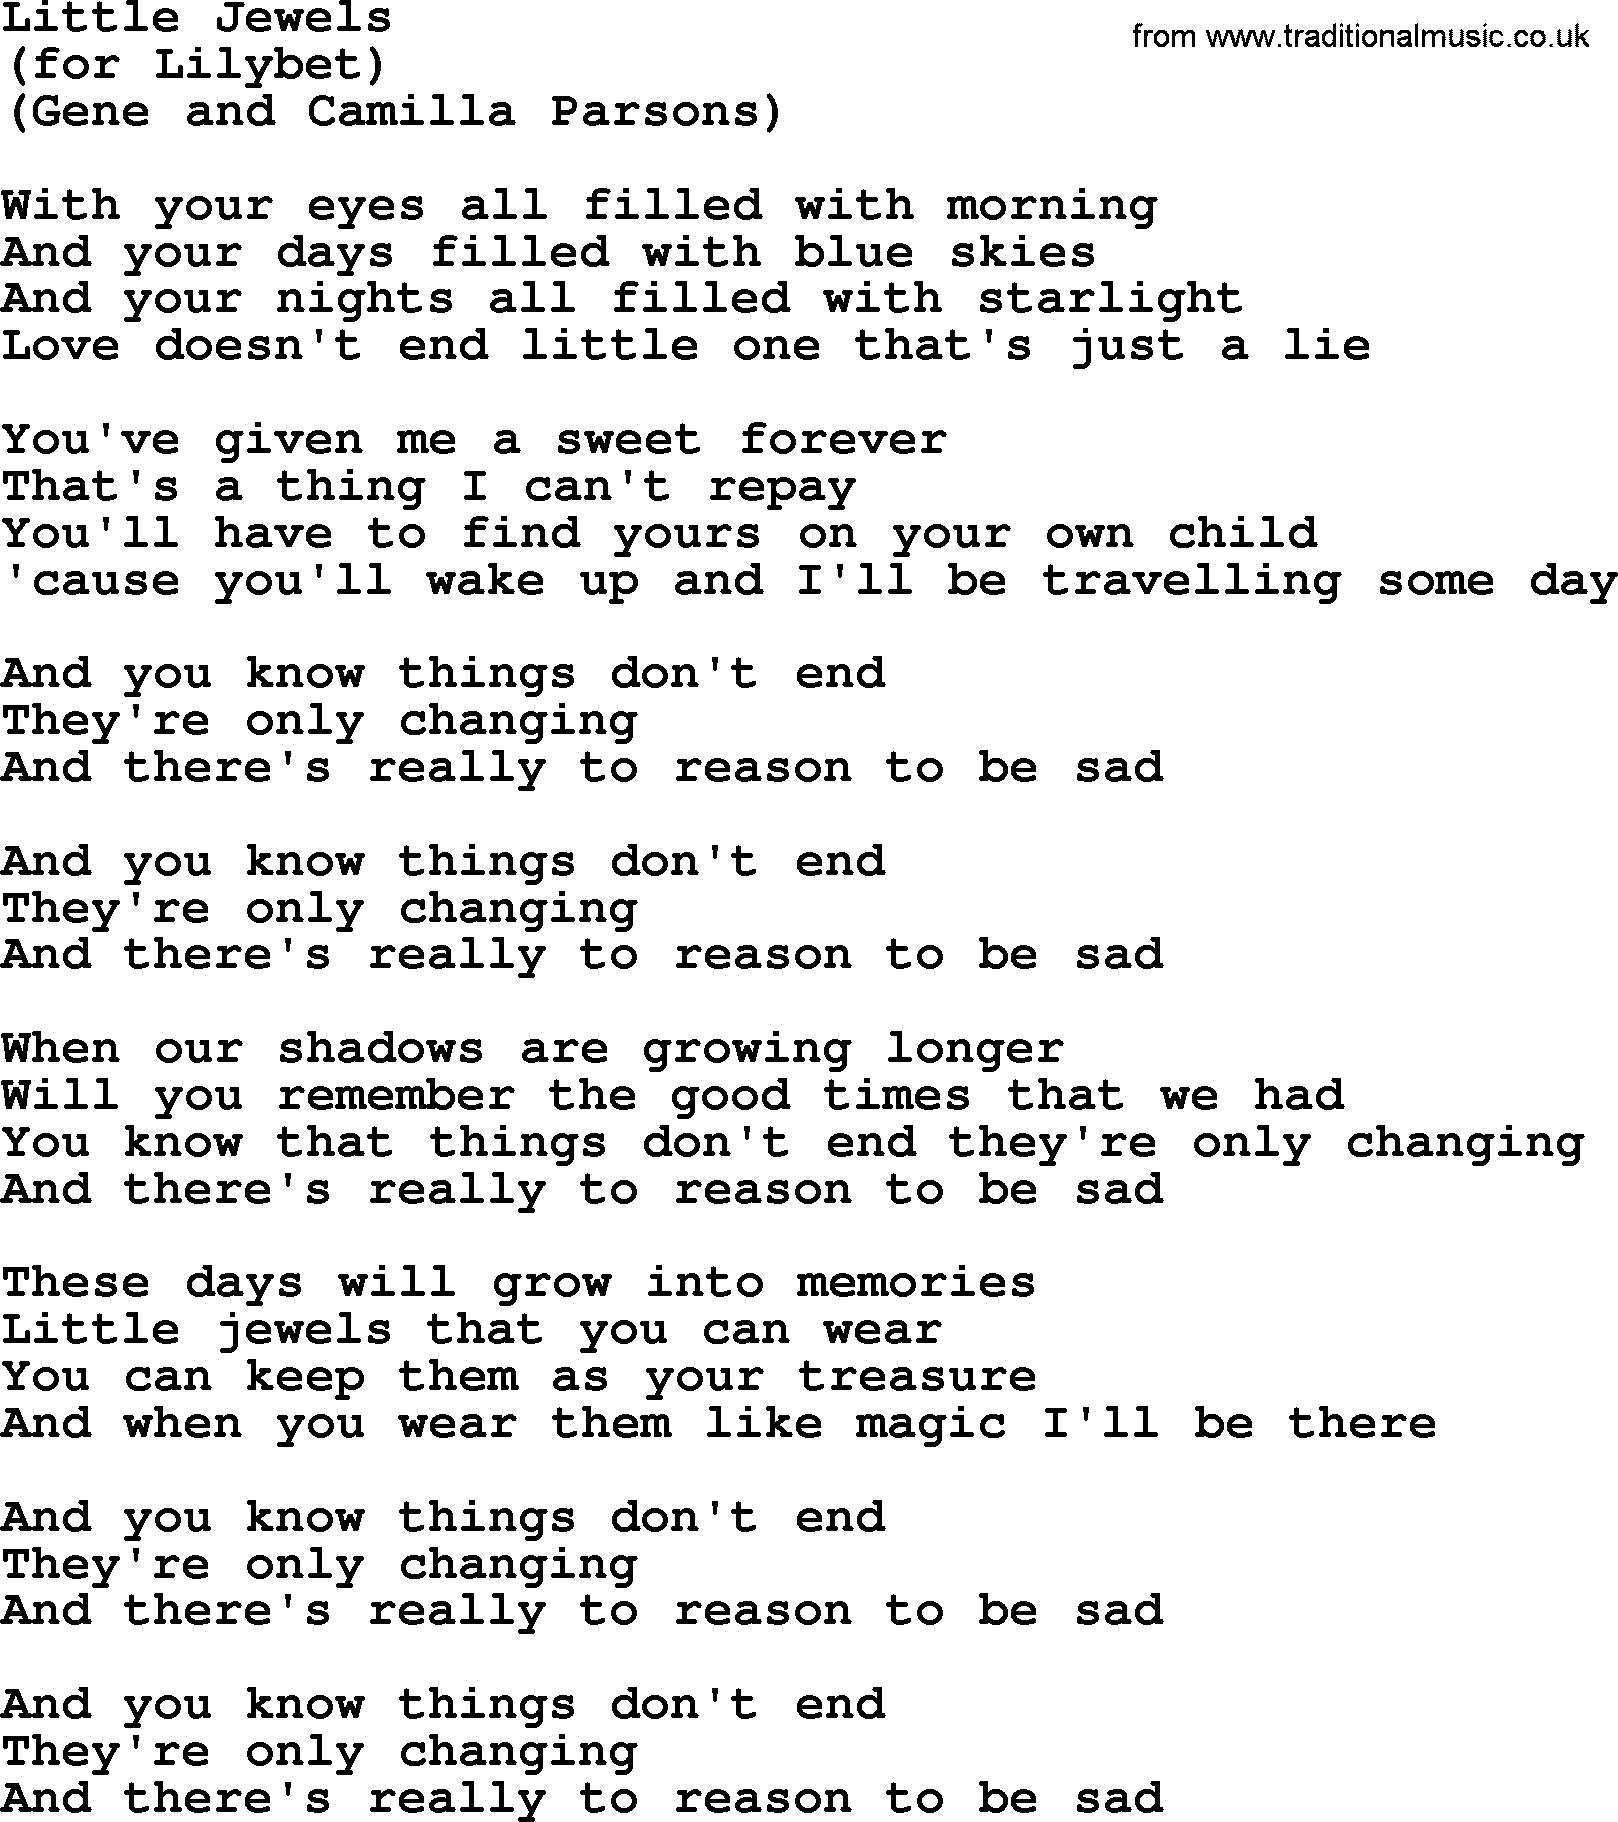 The Byrds song Little Jewels, lyrics